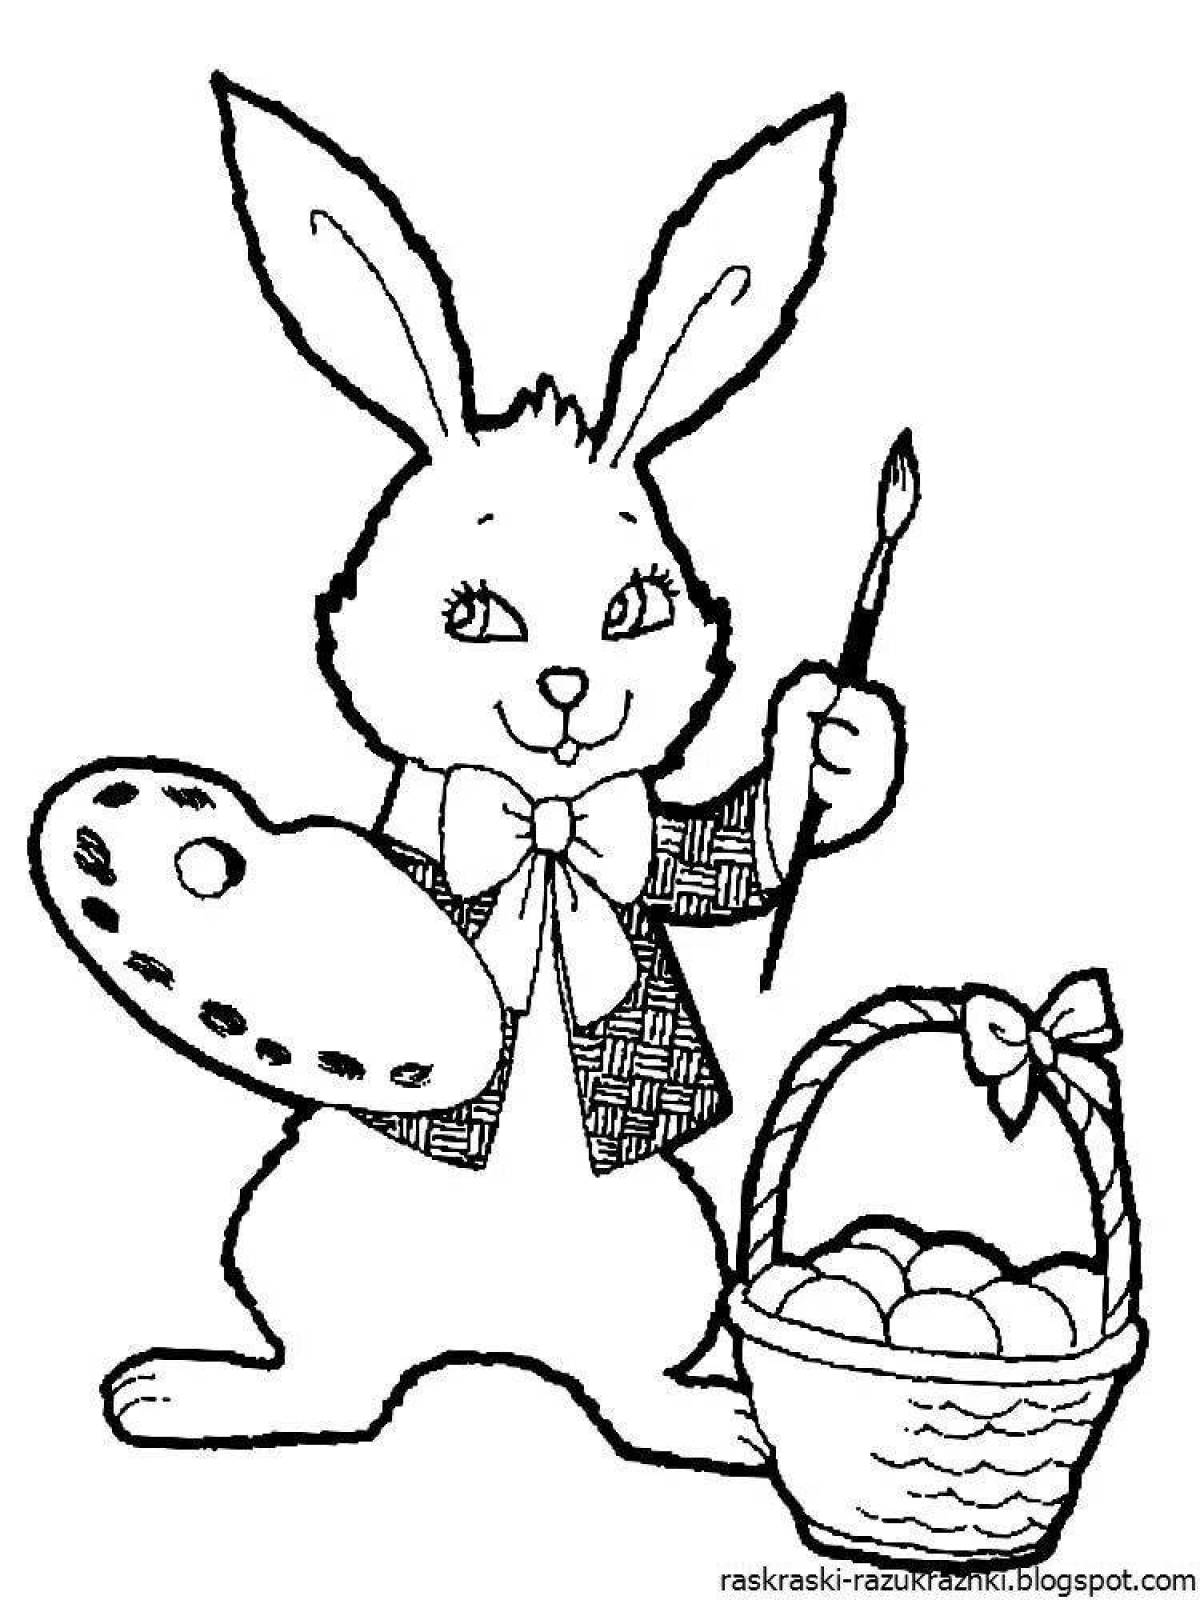 Violent coloring drawing of a rabbit